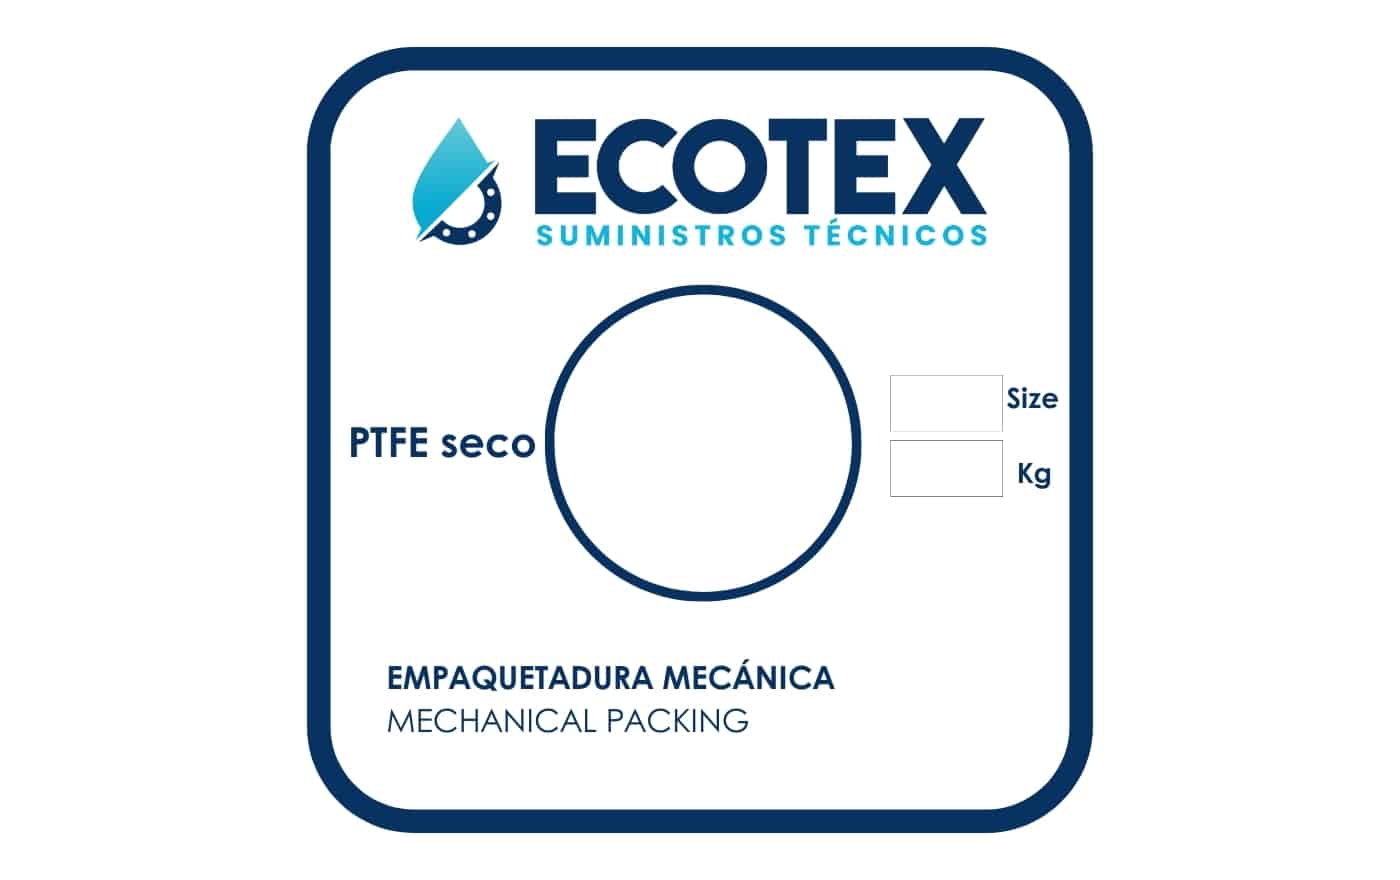 ECOTEX PTFE seco